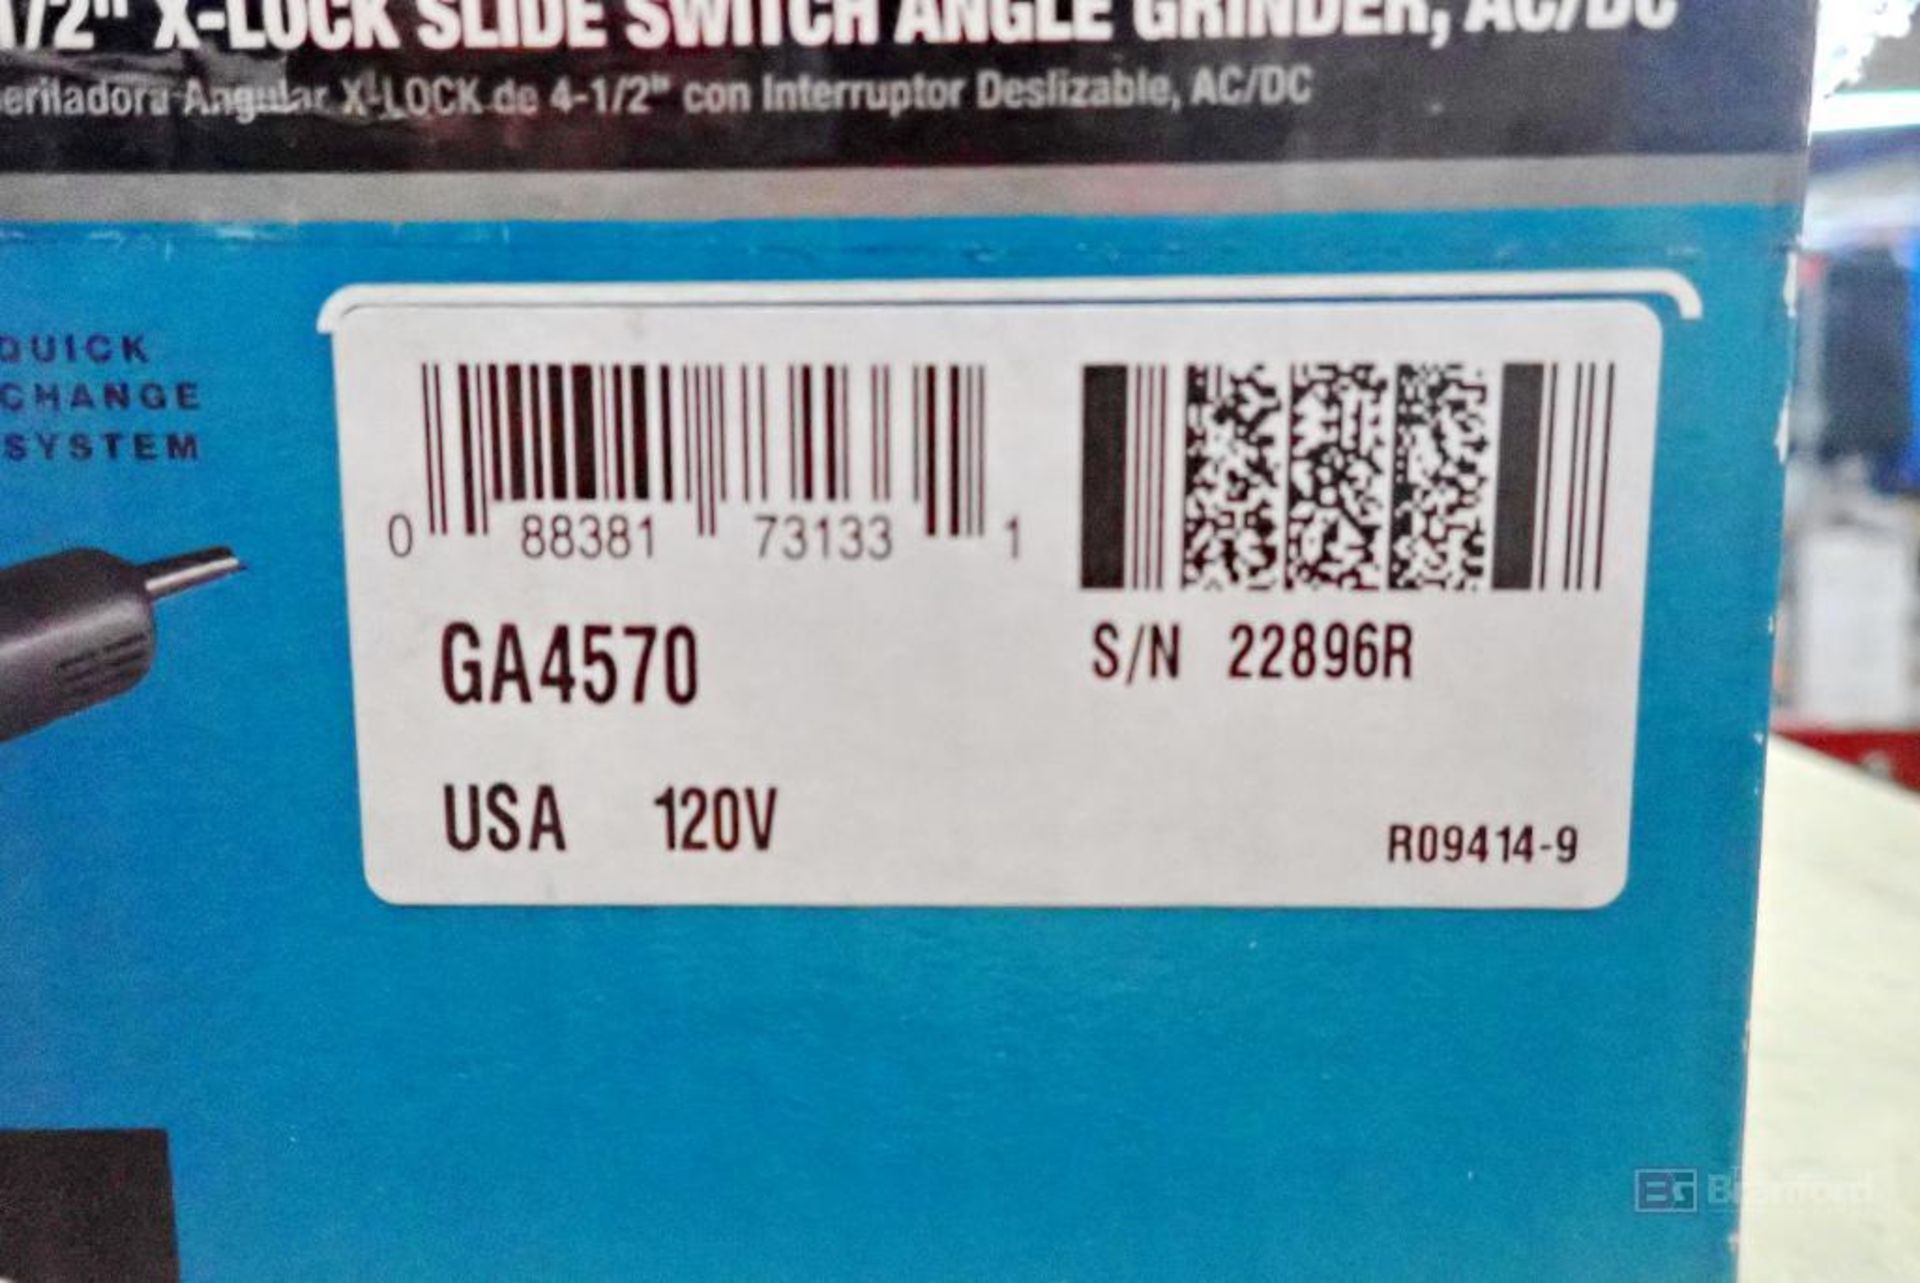 Makita GA4570 4-1/2" X-Lock Slide Switch Angle Grinder - Image 4 of 8